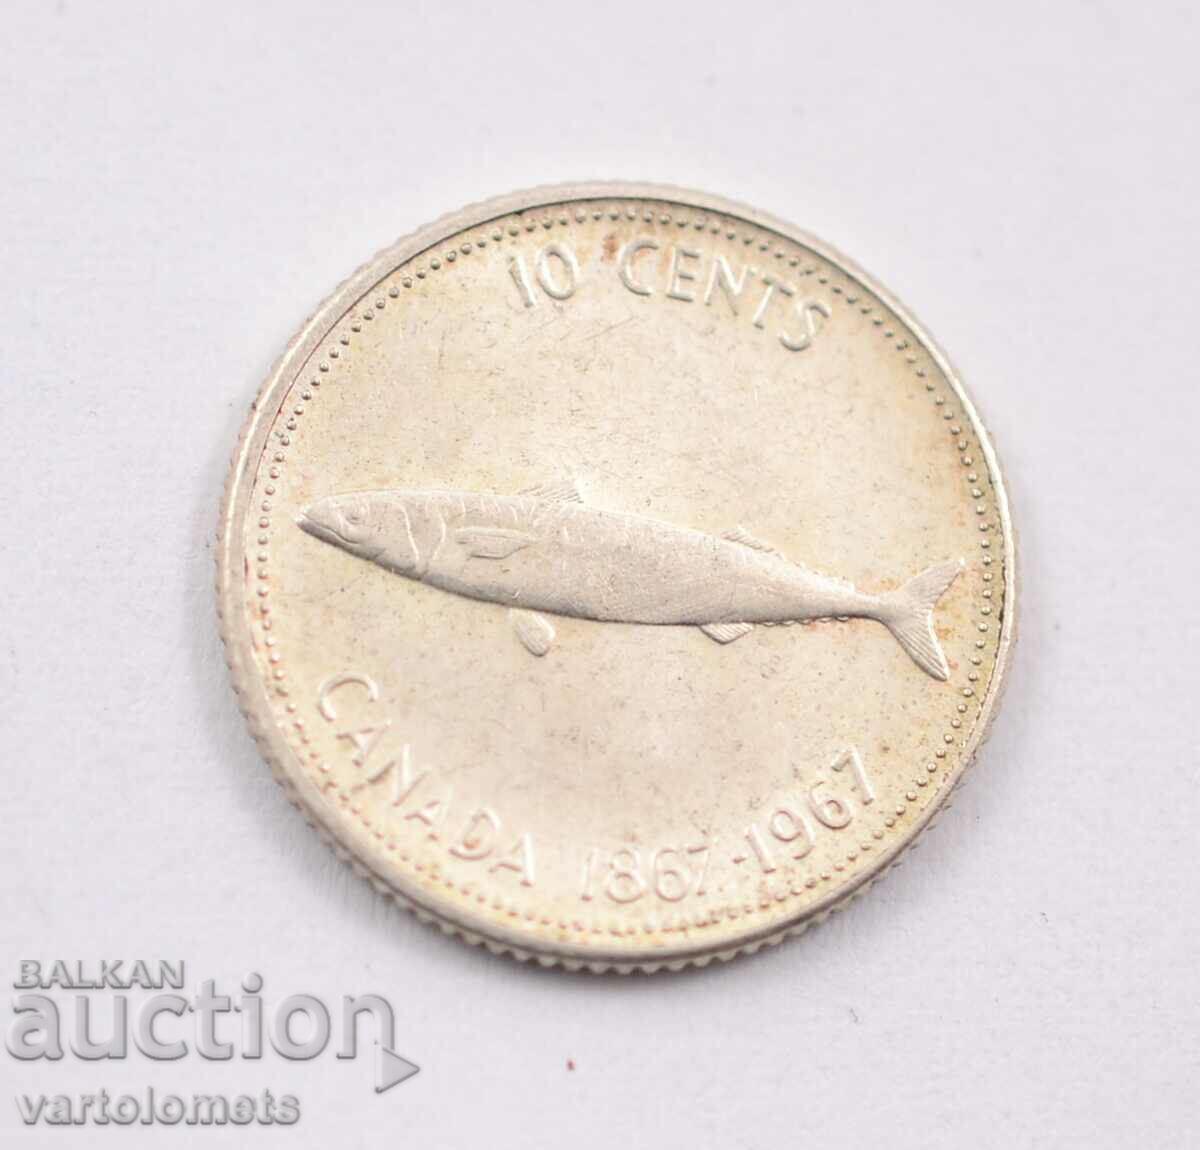 10 цента 1967 - Канада,  Сребро 0.800, 2.33 гр., ø18.3 mm